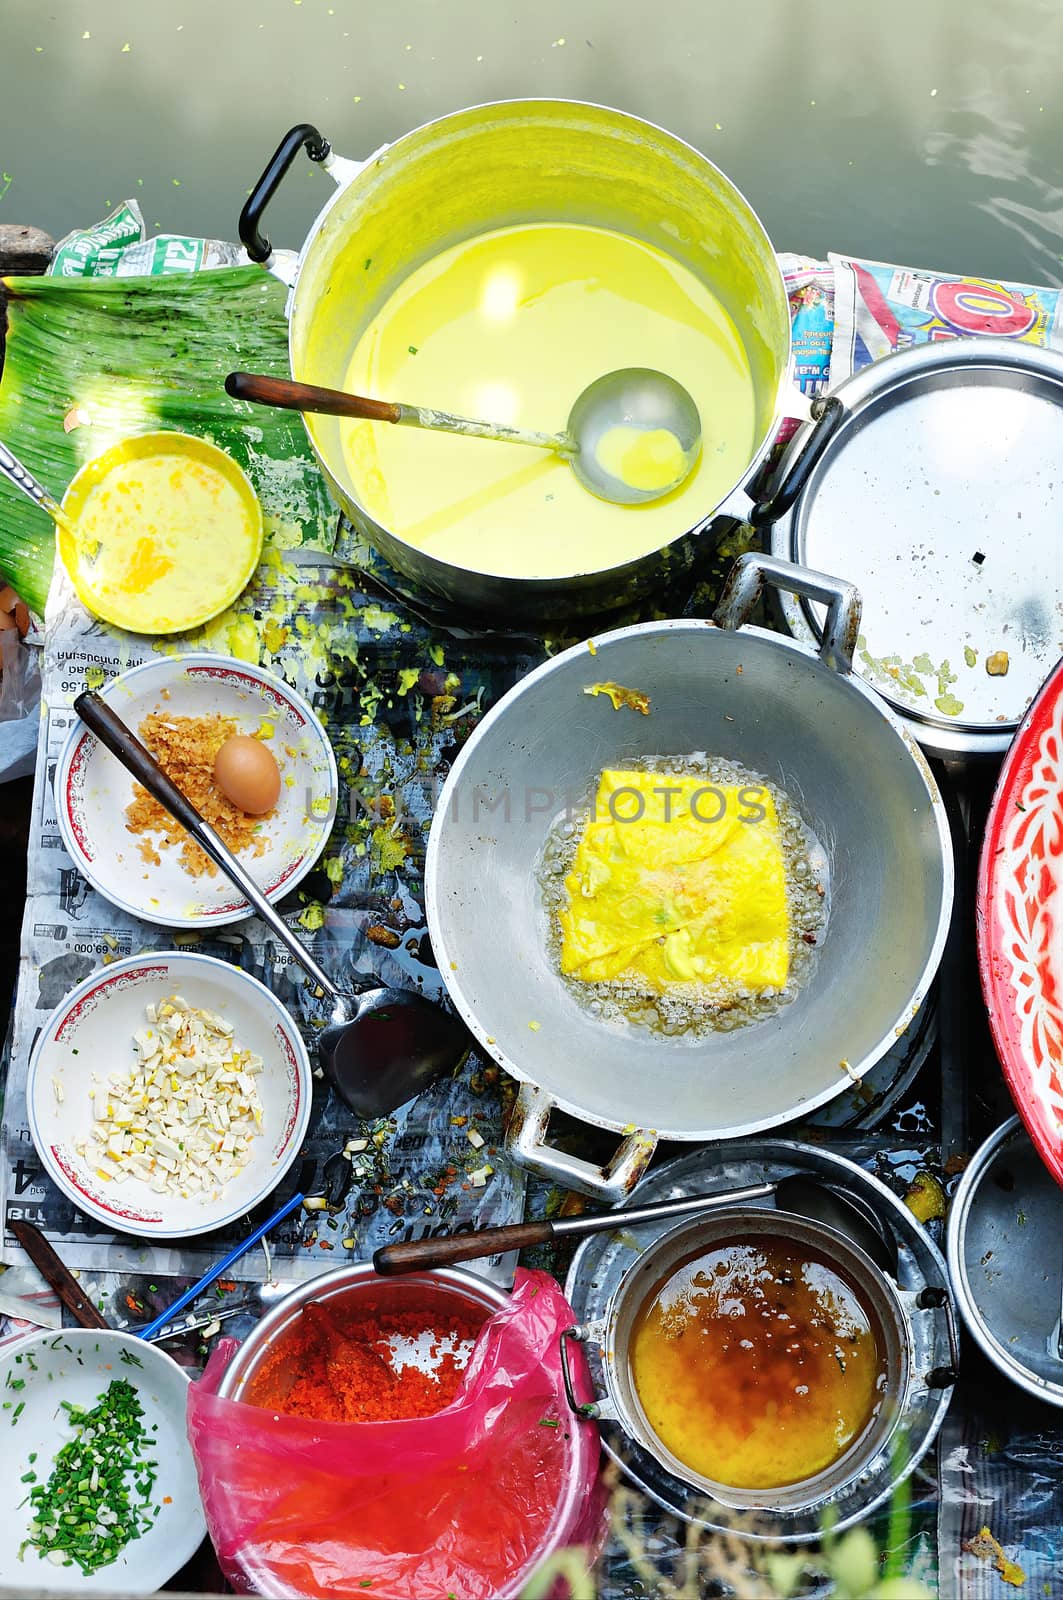 Thai People Cookiing Stuffed Crispy Egg-crepe or Vietnamese style Omlet